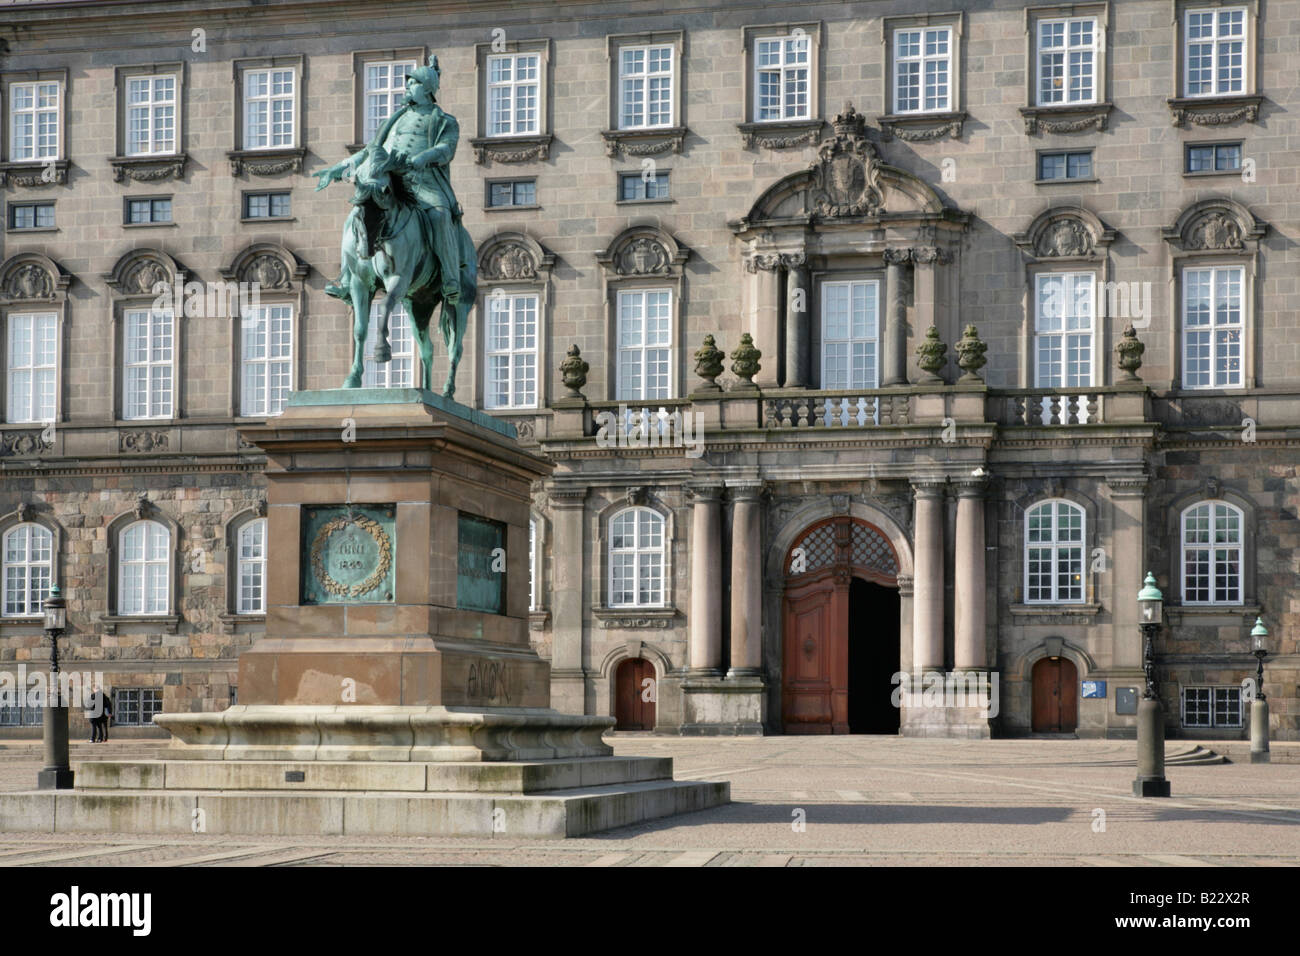 Statue outside the State Parliament or Folketinget, Christiansborg, Copenhagen, Denmark. Stock Photo